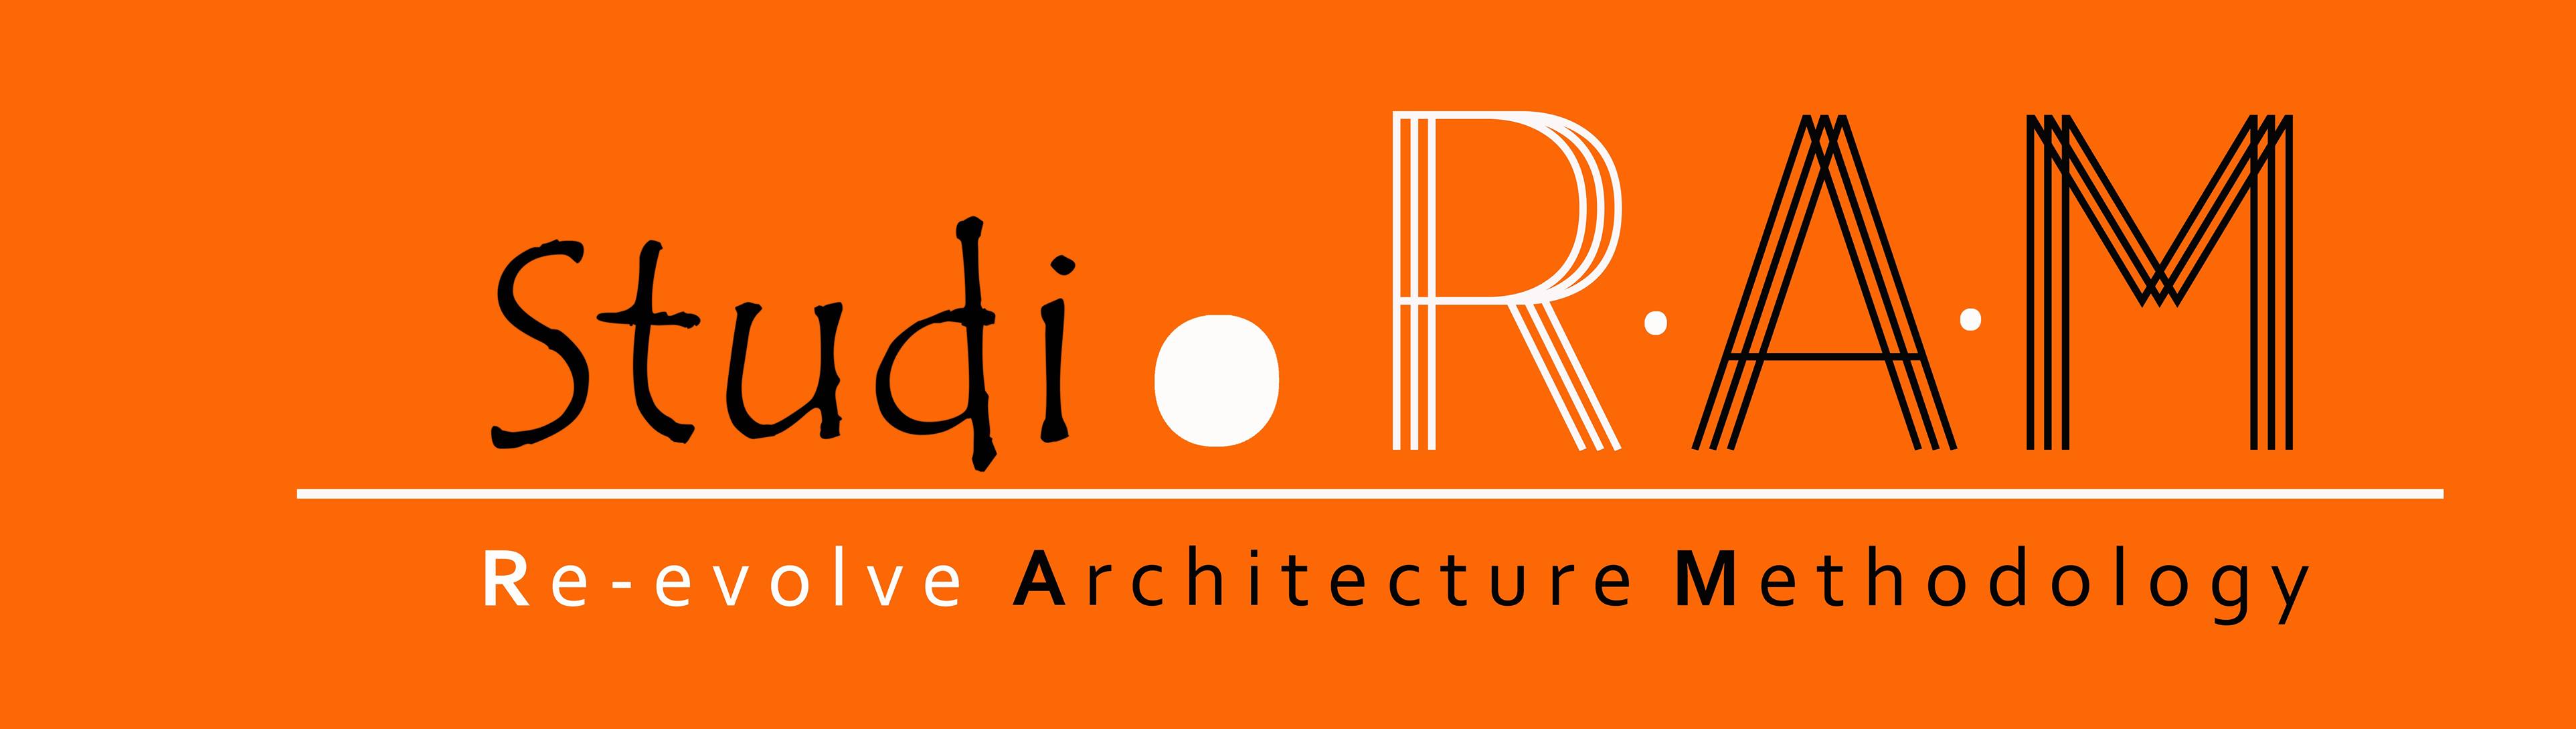 Studio RAM architects|IT Services|Professional Services